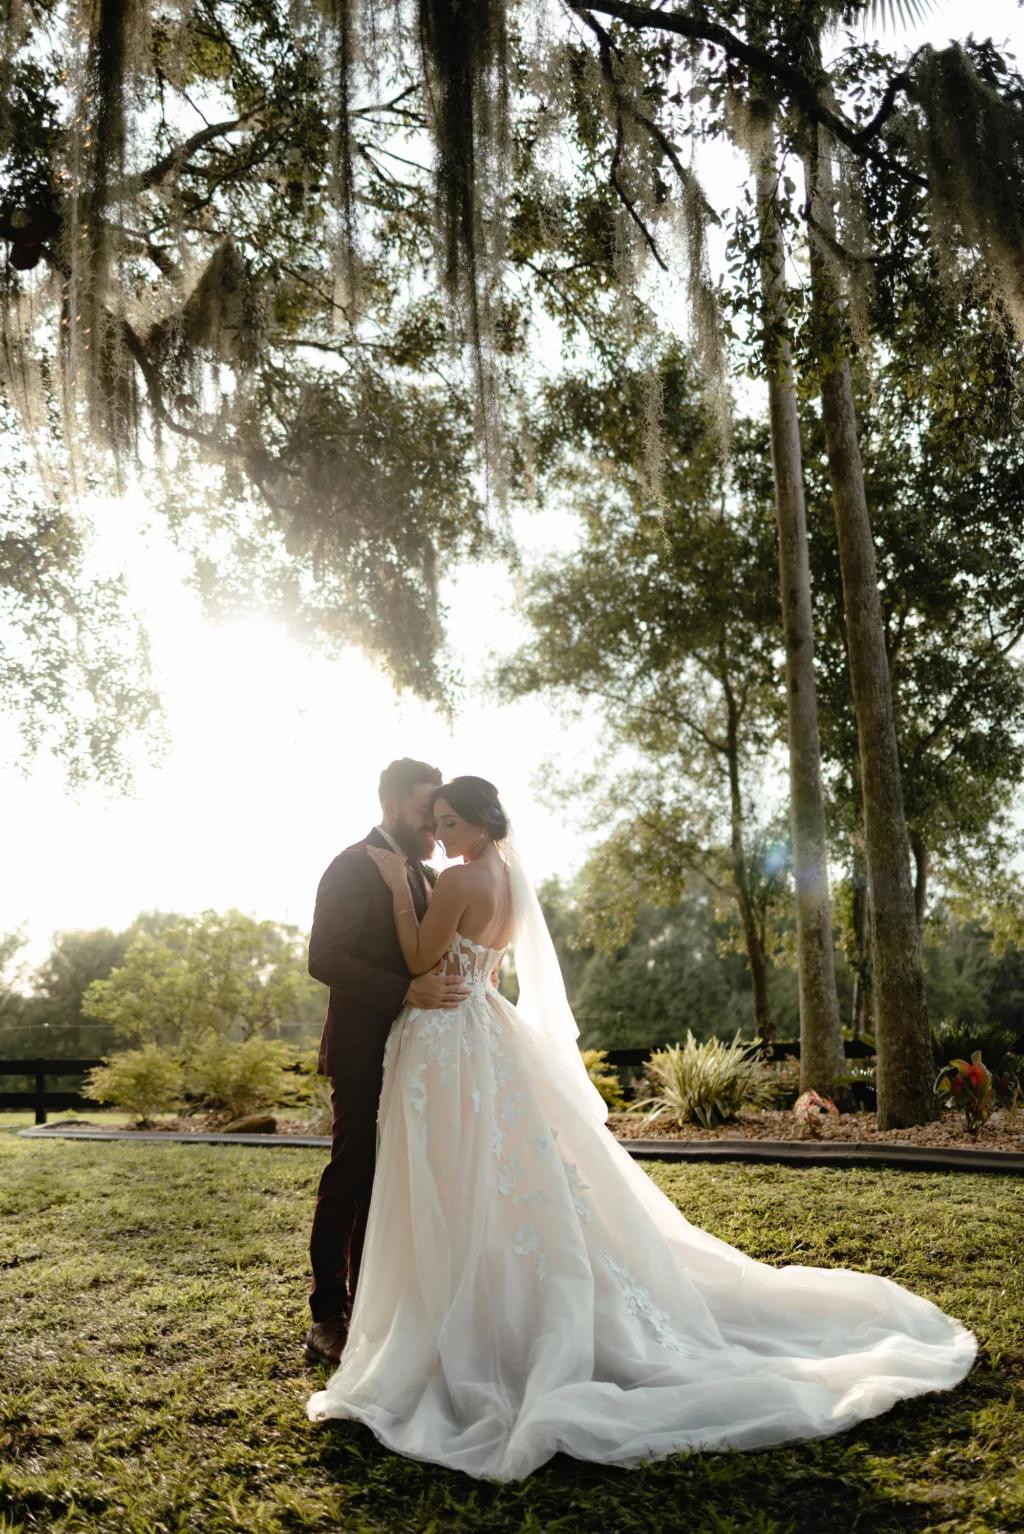 Romantic Bride and Groom Sunset Wedding Portrait | Outdoor Florida Wedding Ceremony Decor Ideas | Brooksville Event Venue La Hacienda on Snow Hill | Florida Planner The Olive Tree Weddings